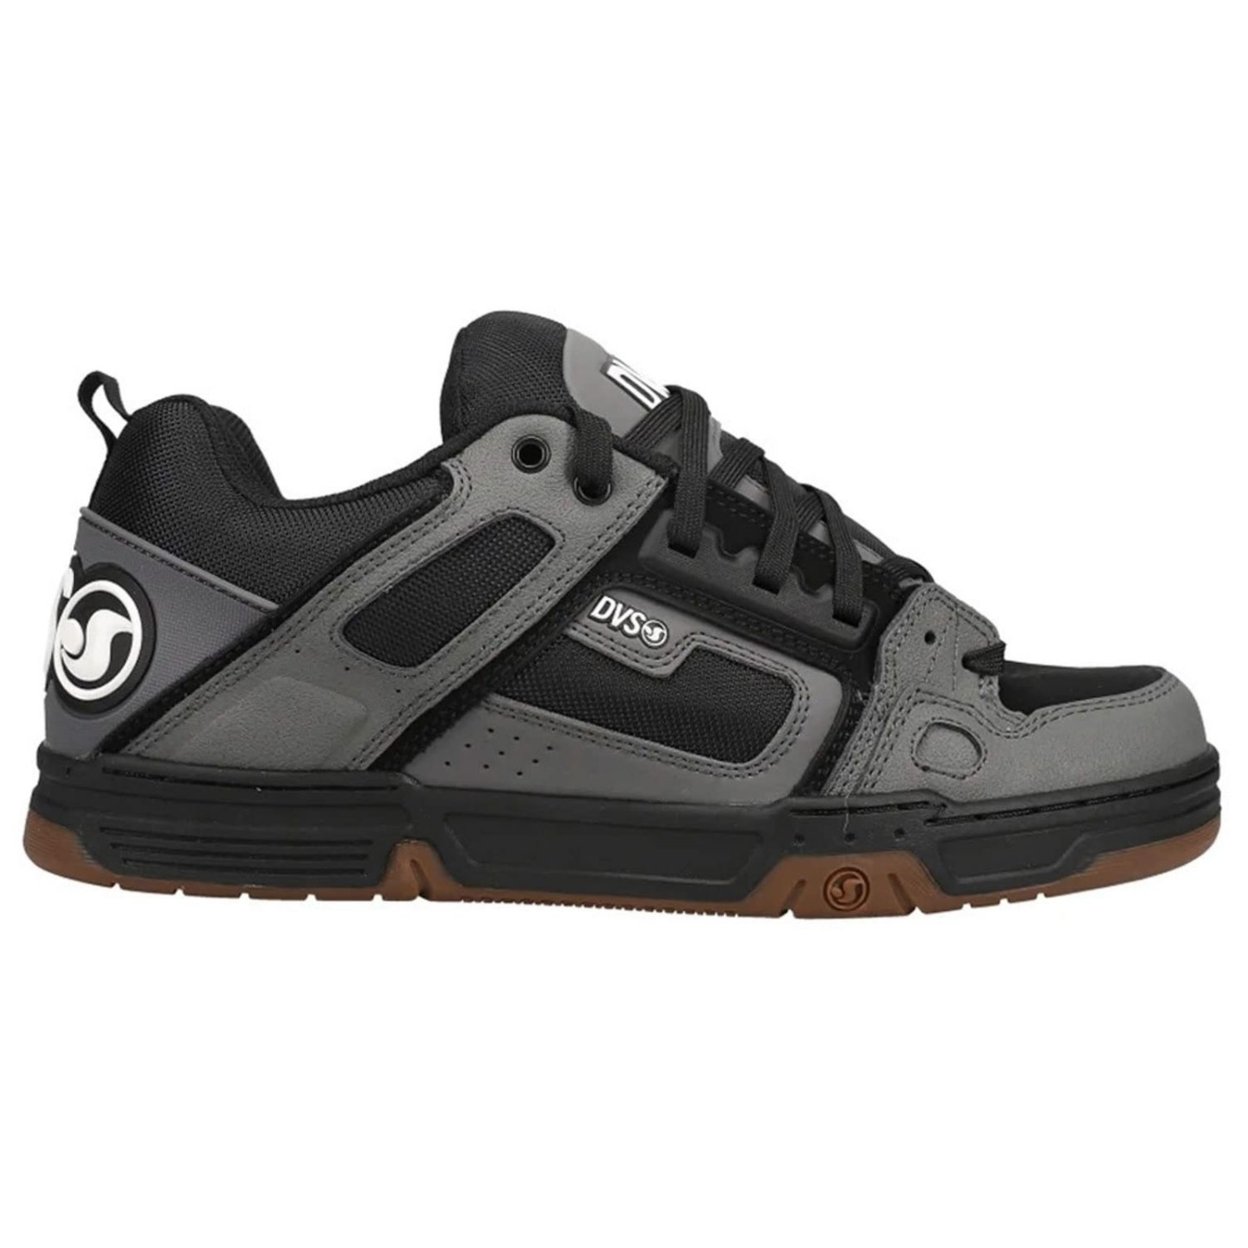 DVS Skateboard Shoes Comanche Charcoal/Black/Gum/White Mens 0 CHARCOAL BLACK WHITE NUBUCK - CHARCOAL BLACK WHITE NUBUCK, 11.5